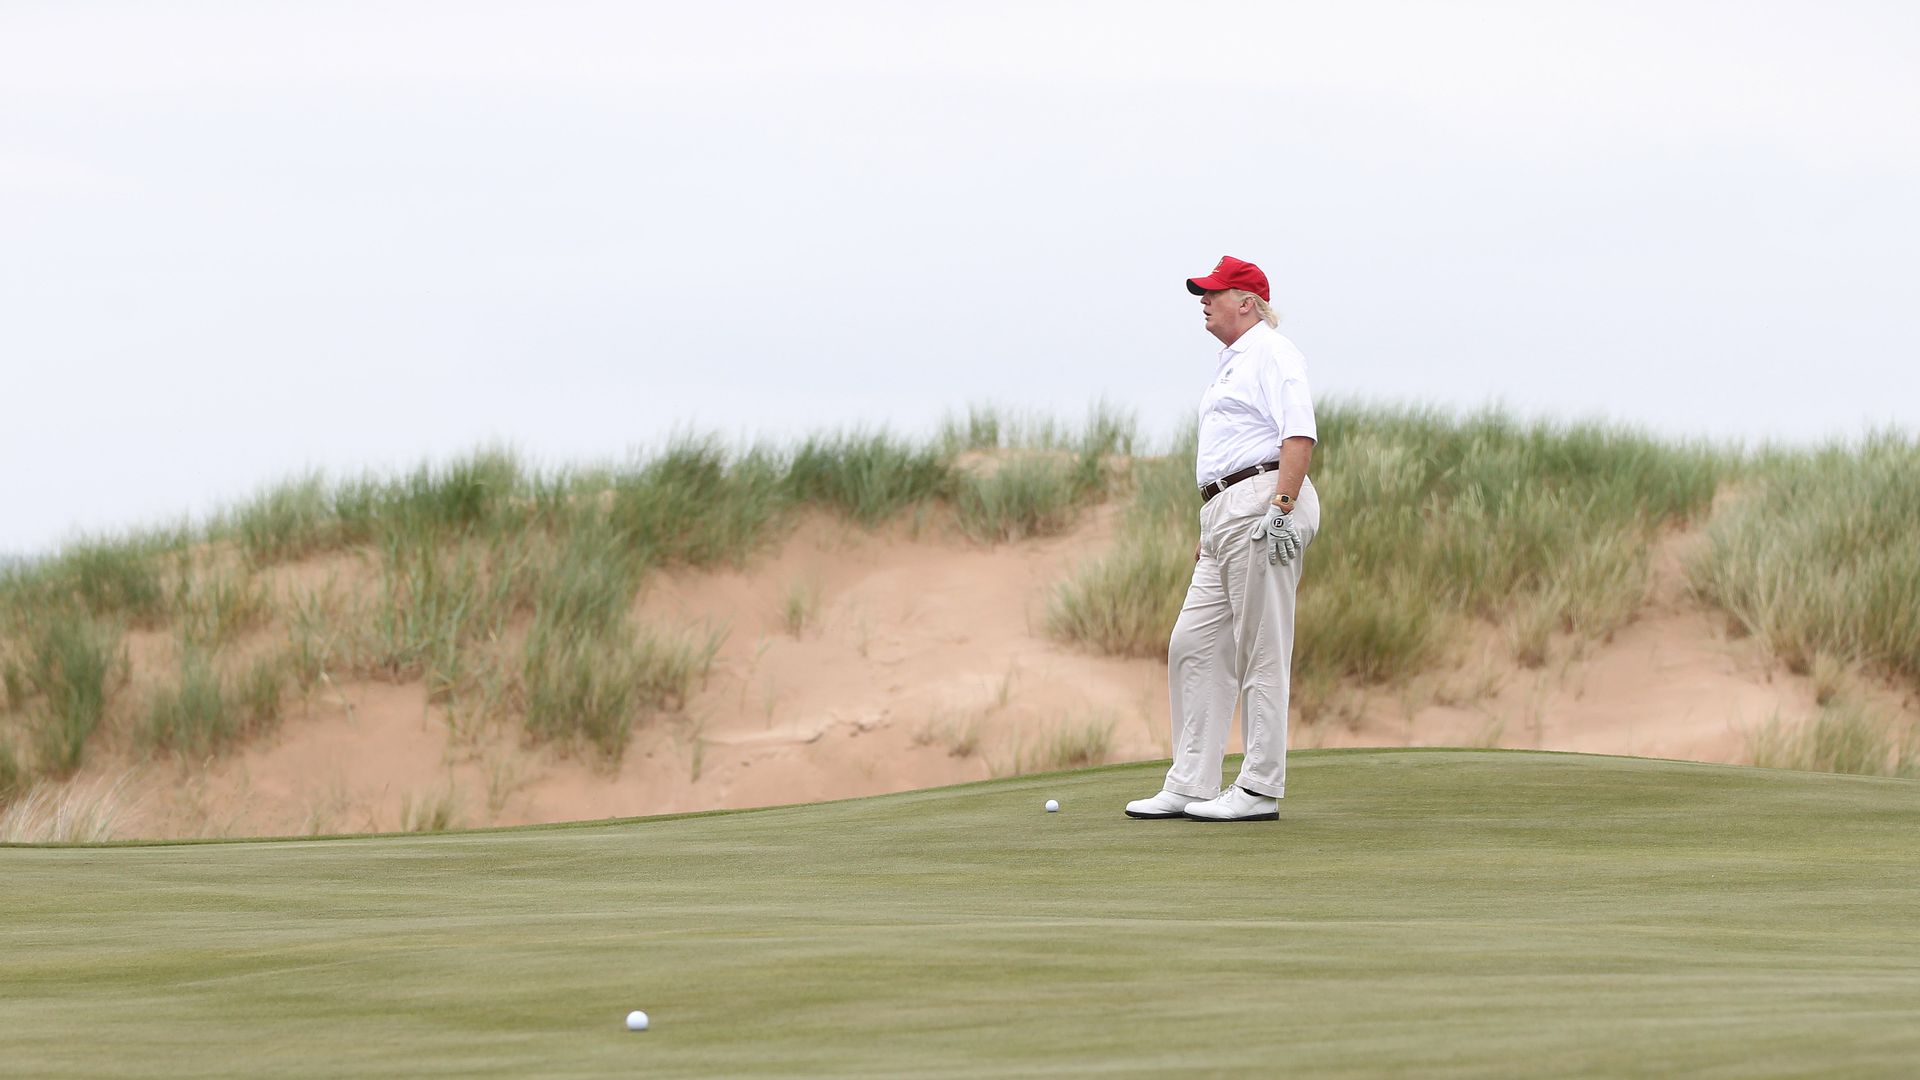 Trump at his golf course in Scotland